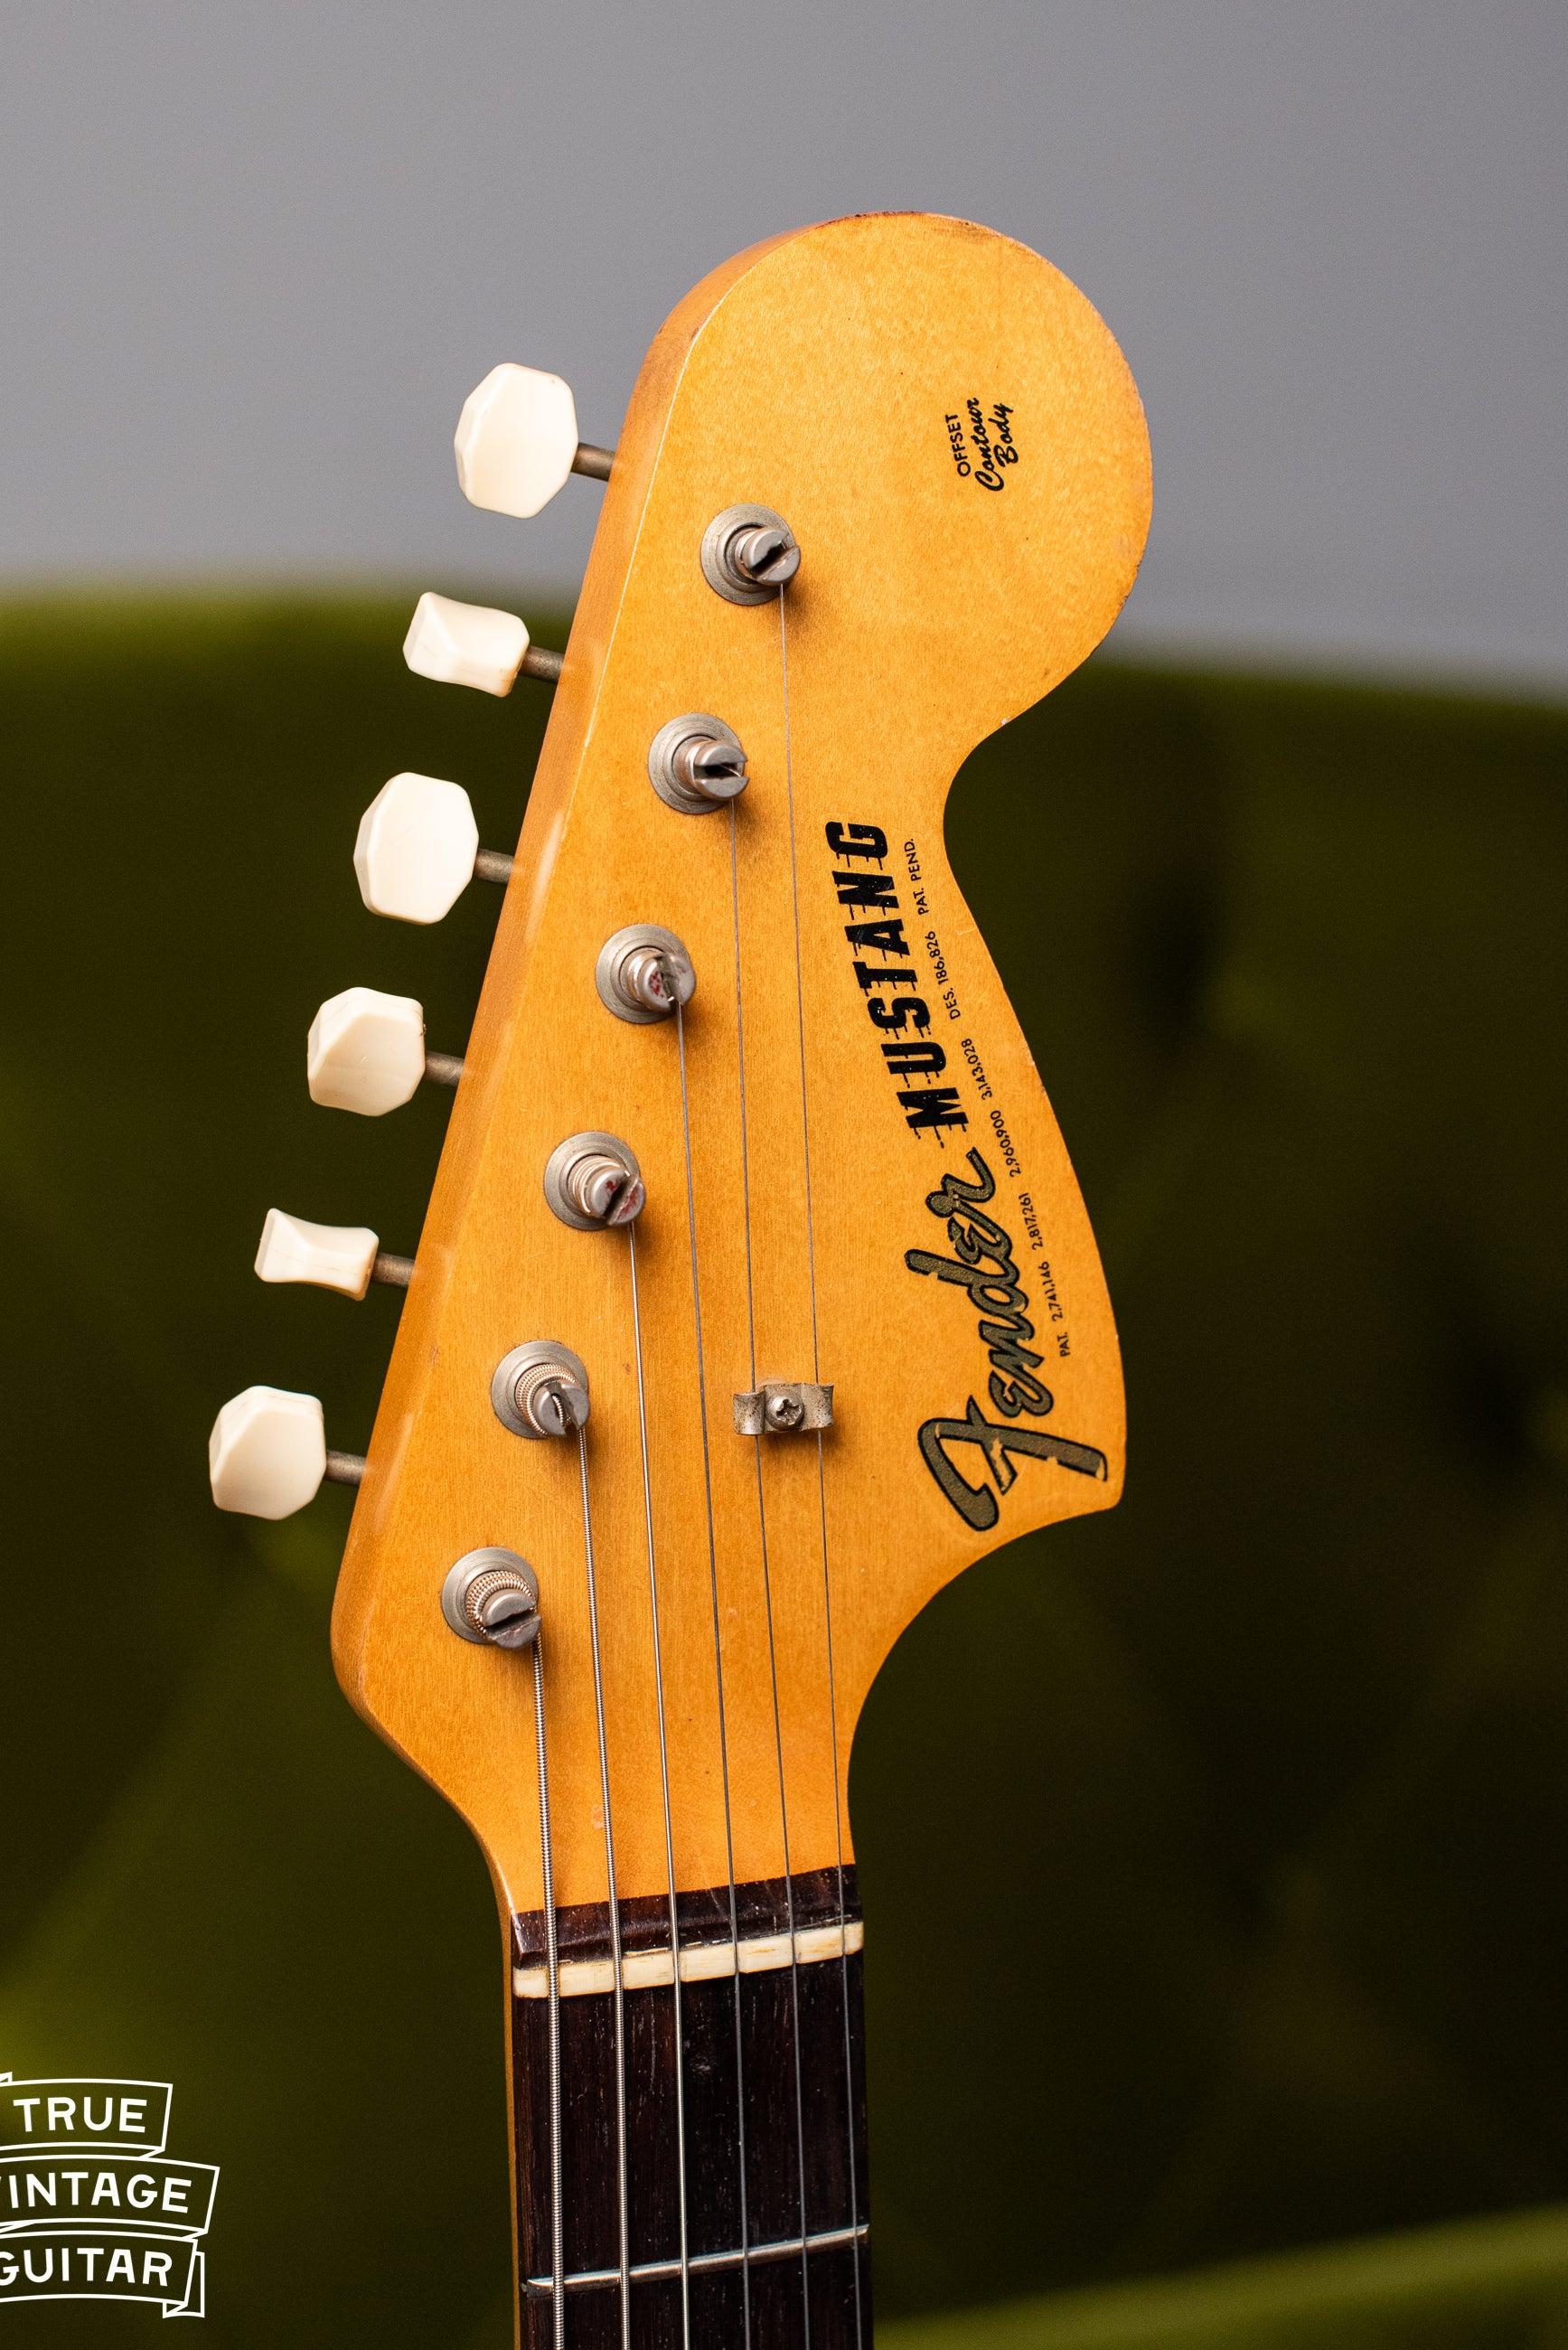 Headstock, neck, Vintage 1966 Fender Mustang